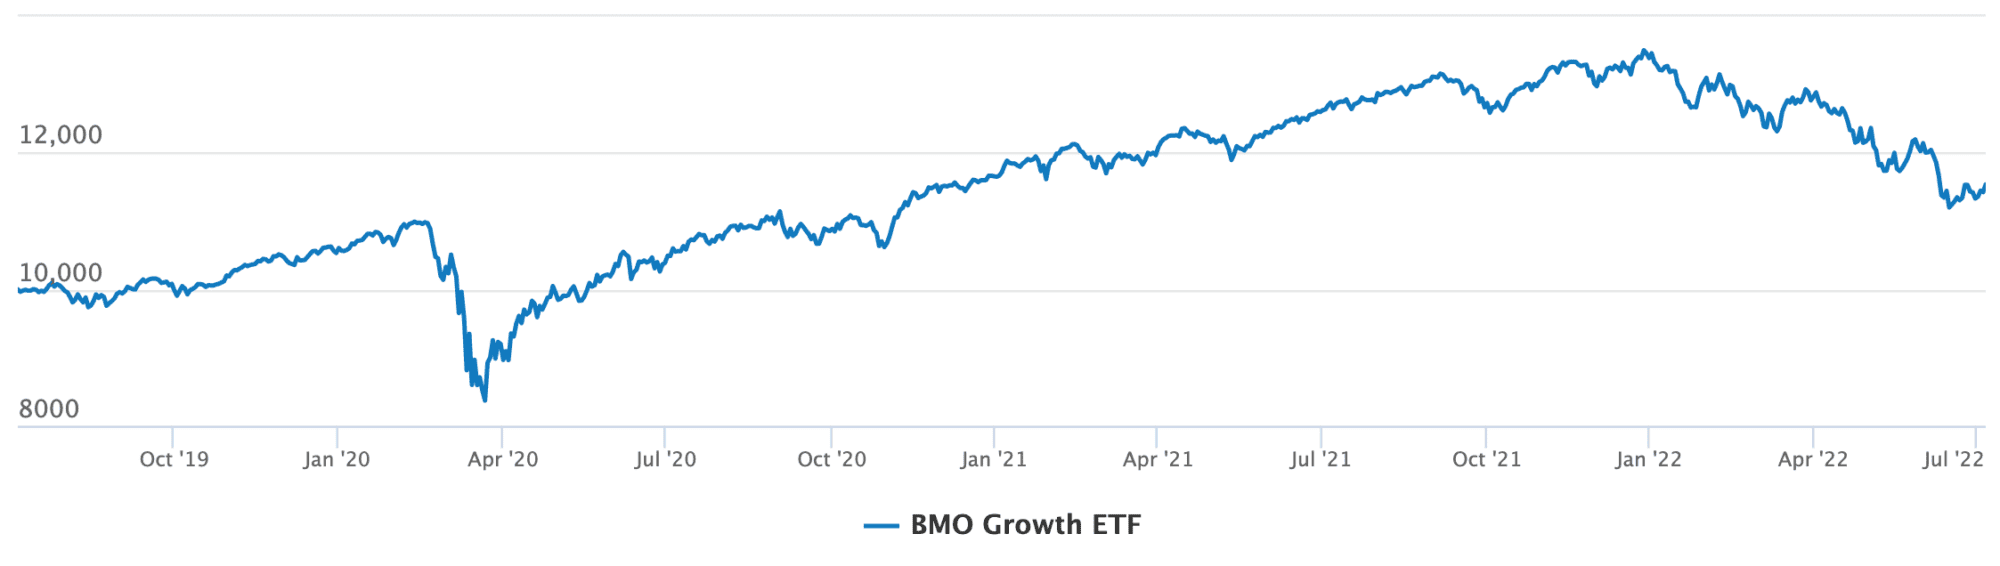 zgro growth graph